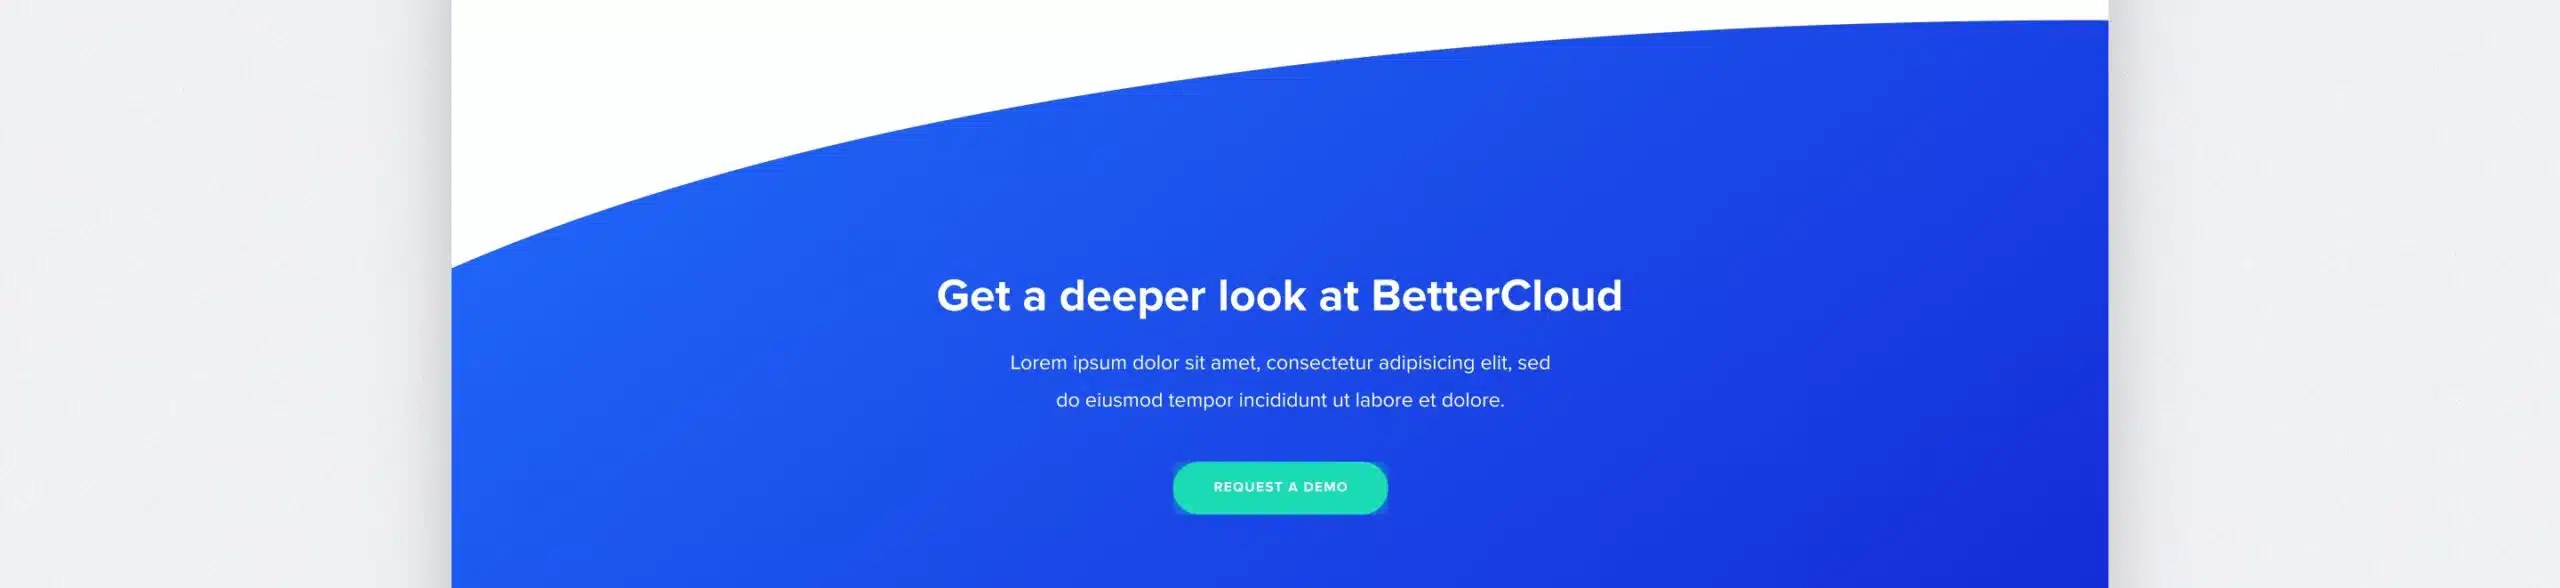 BetterCloud-Desktop-Home_Page_07